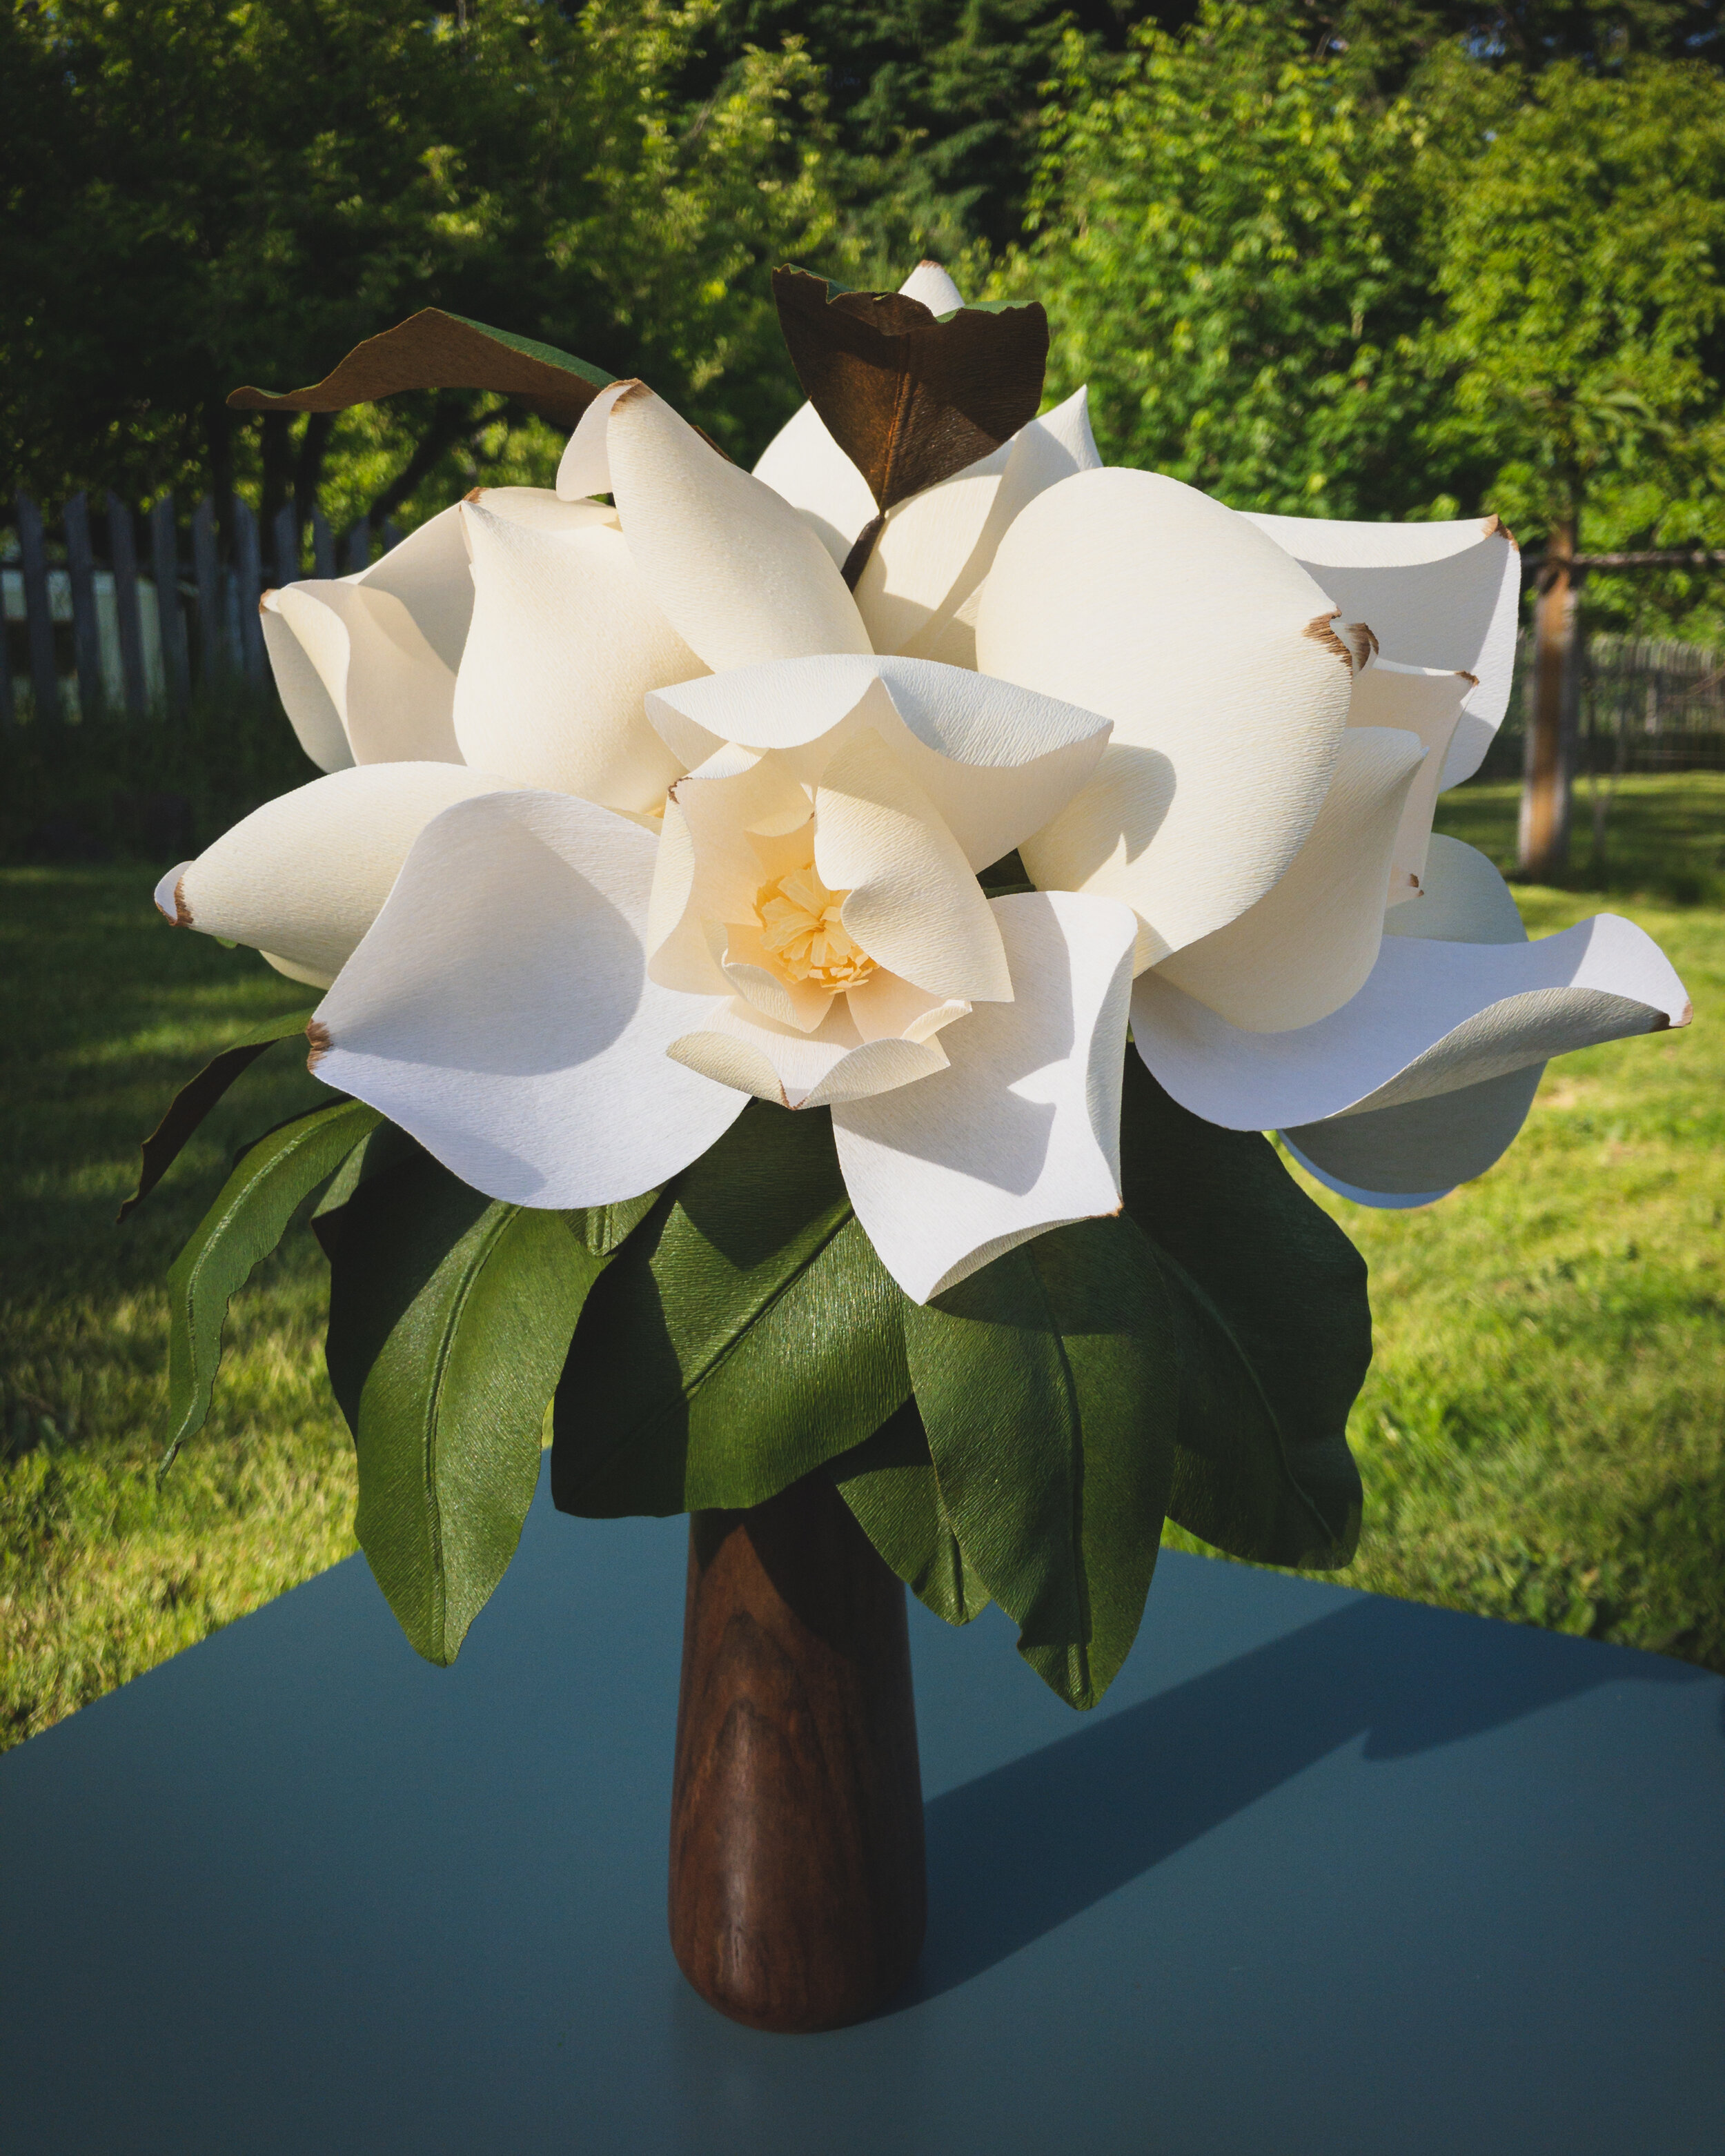 southern magnolia